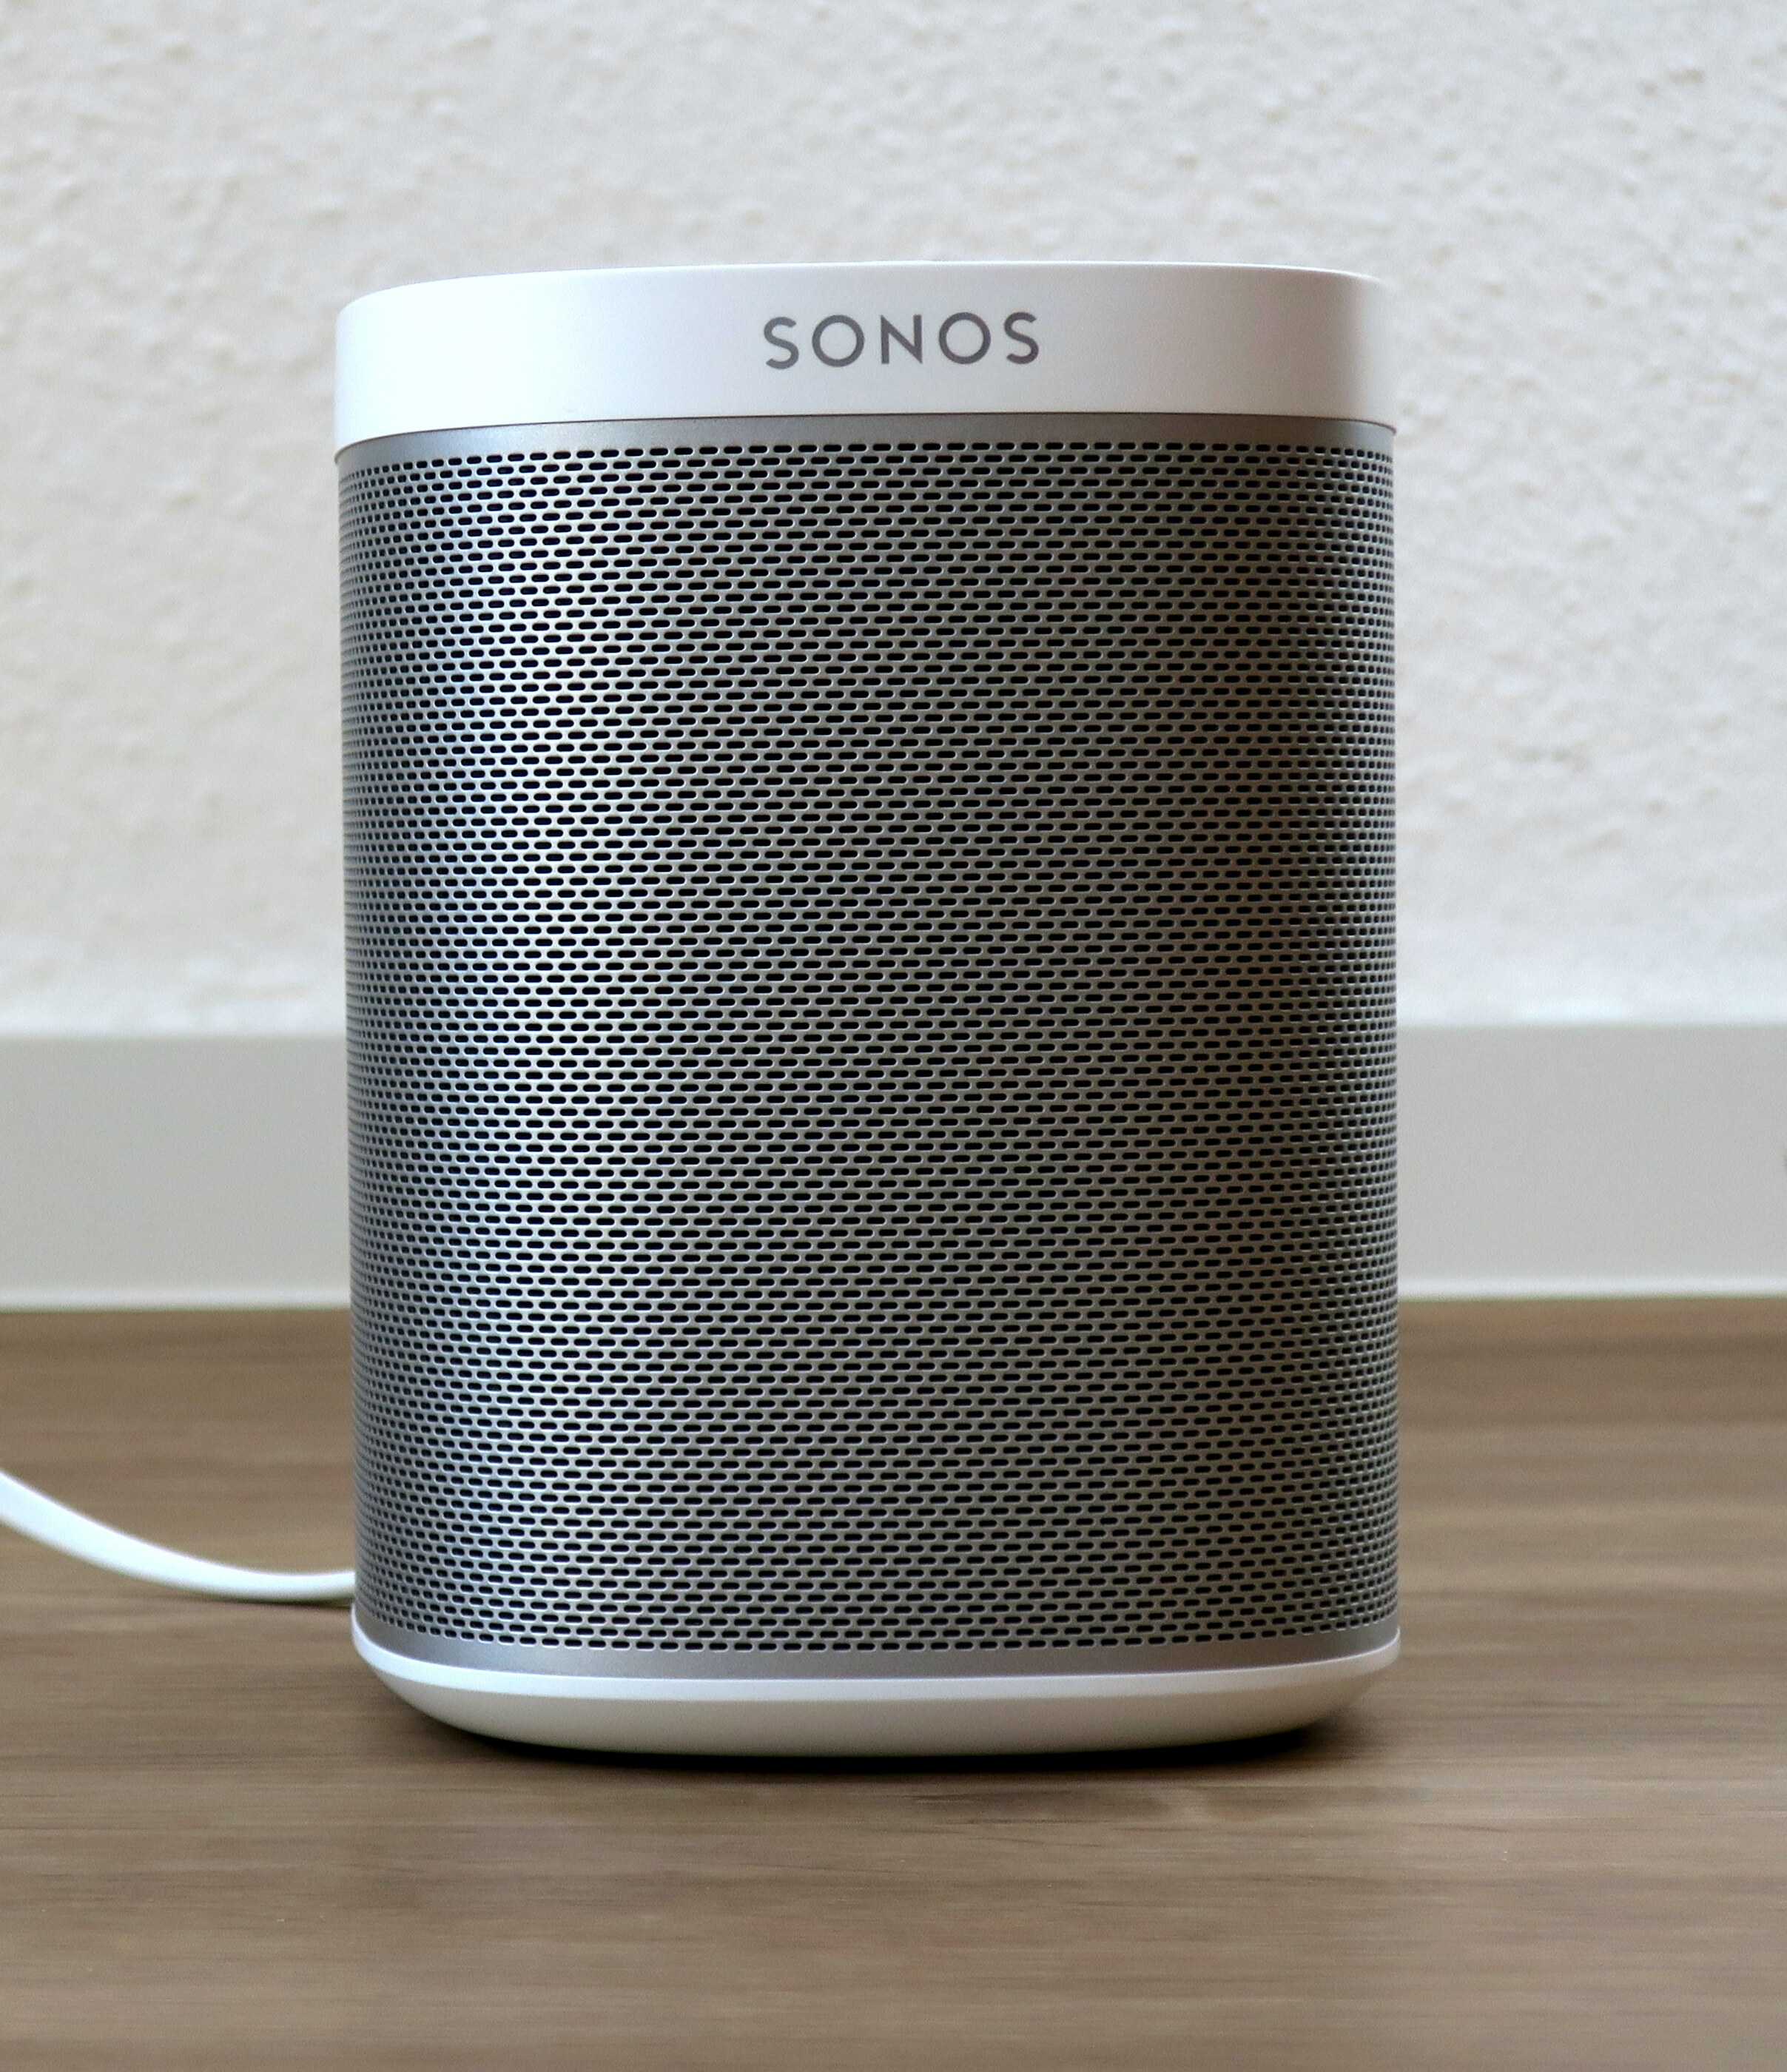 File:Sonos PLAY wireless speaker (cropped).jpg - Wikimedia Commons